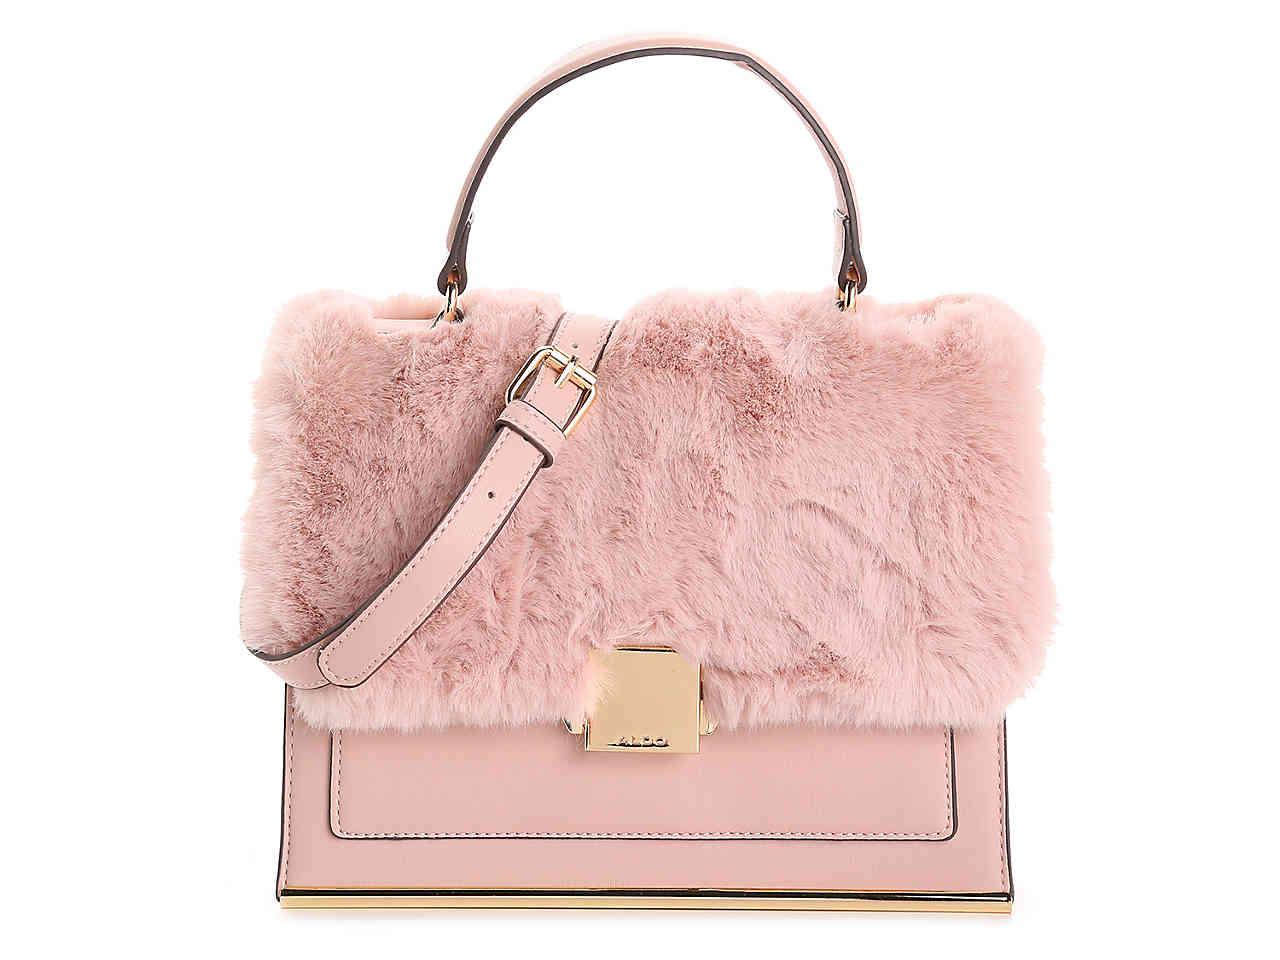 ALDO Accadia Crossbody Bag in Light Pink (Pink) - Lyst